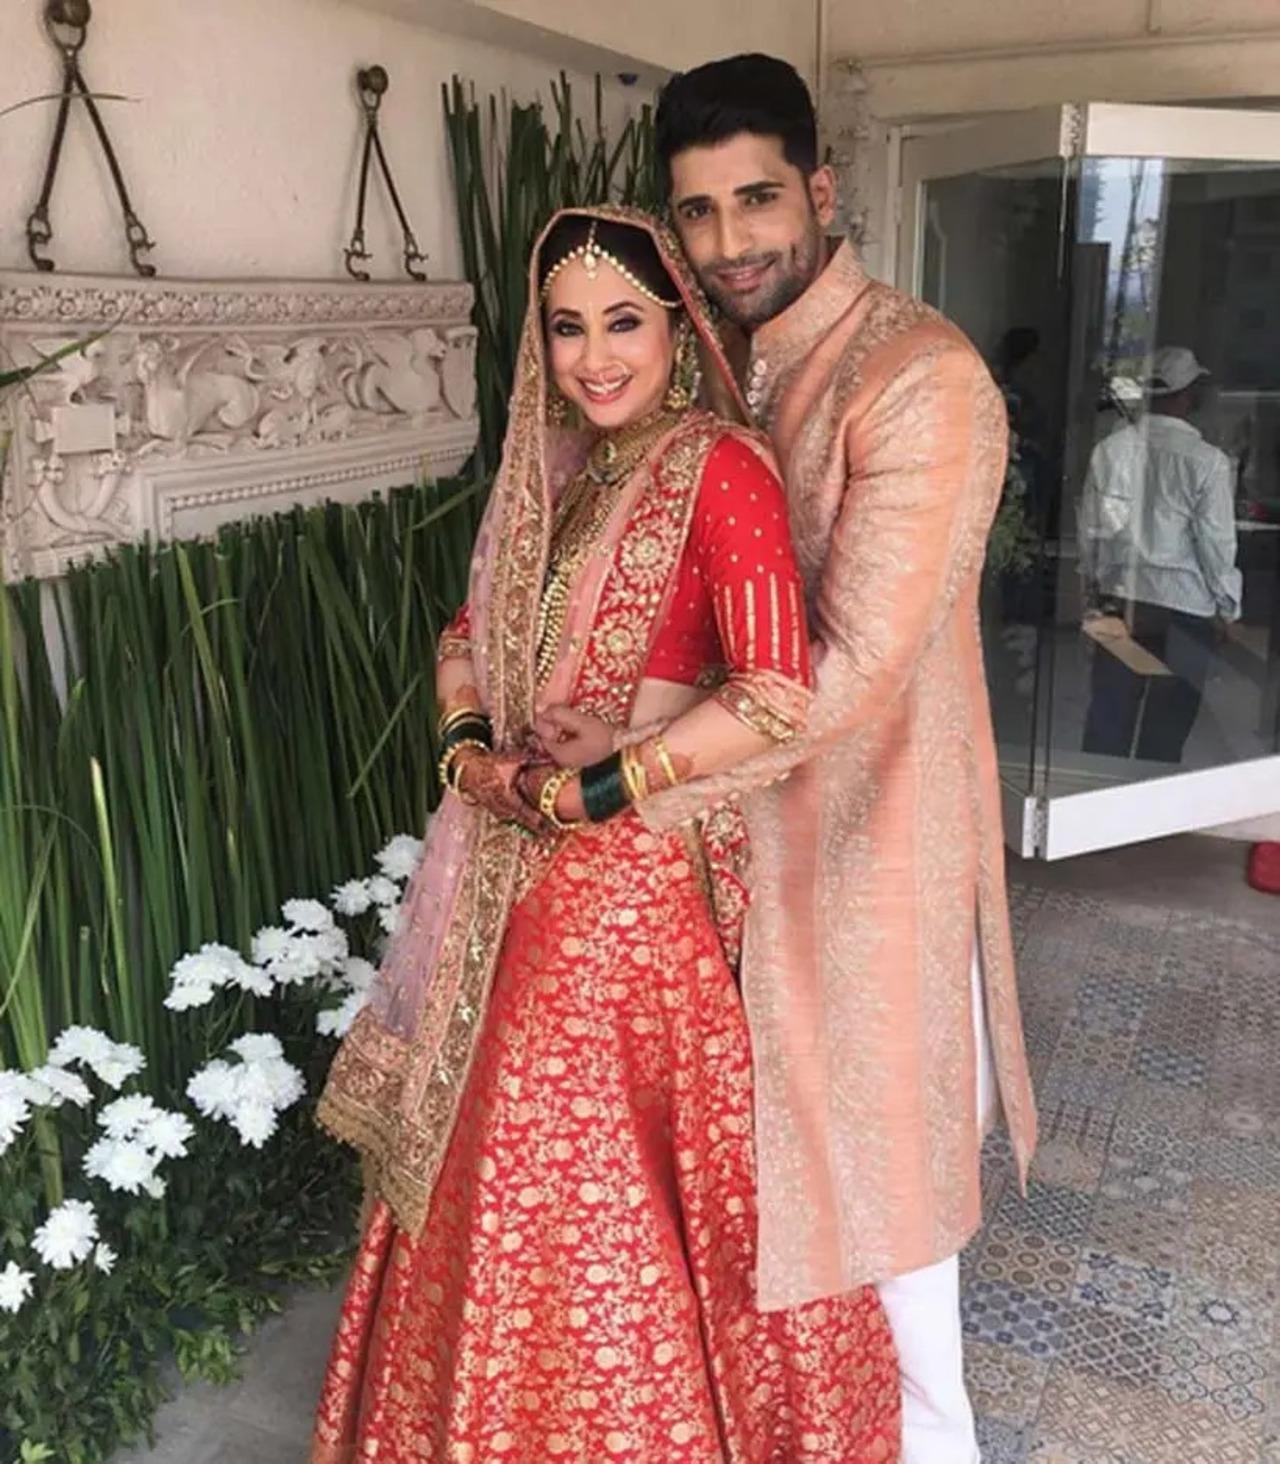 Actress Urmila Matondkar married Kashmir based businessman and model Mohsin Akhtar Mir on 3 March 2016